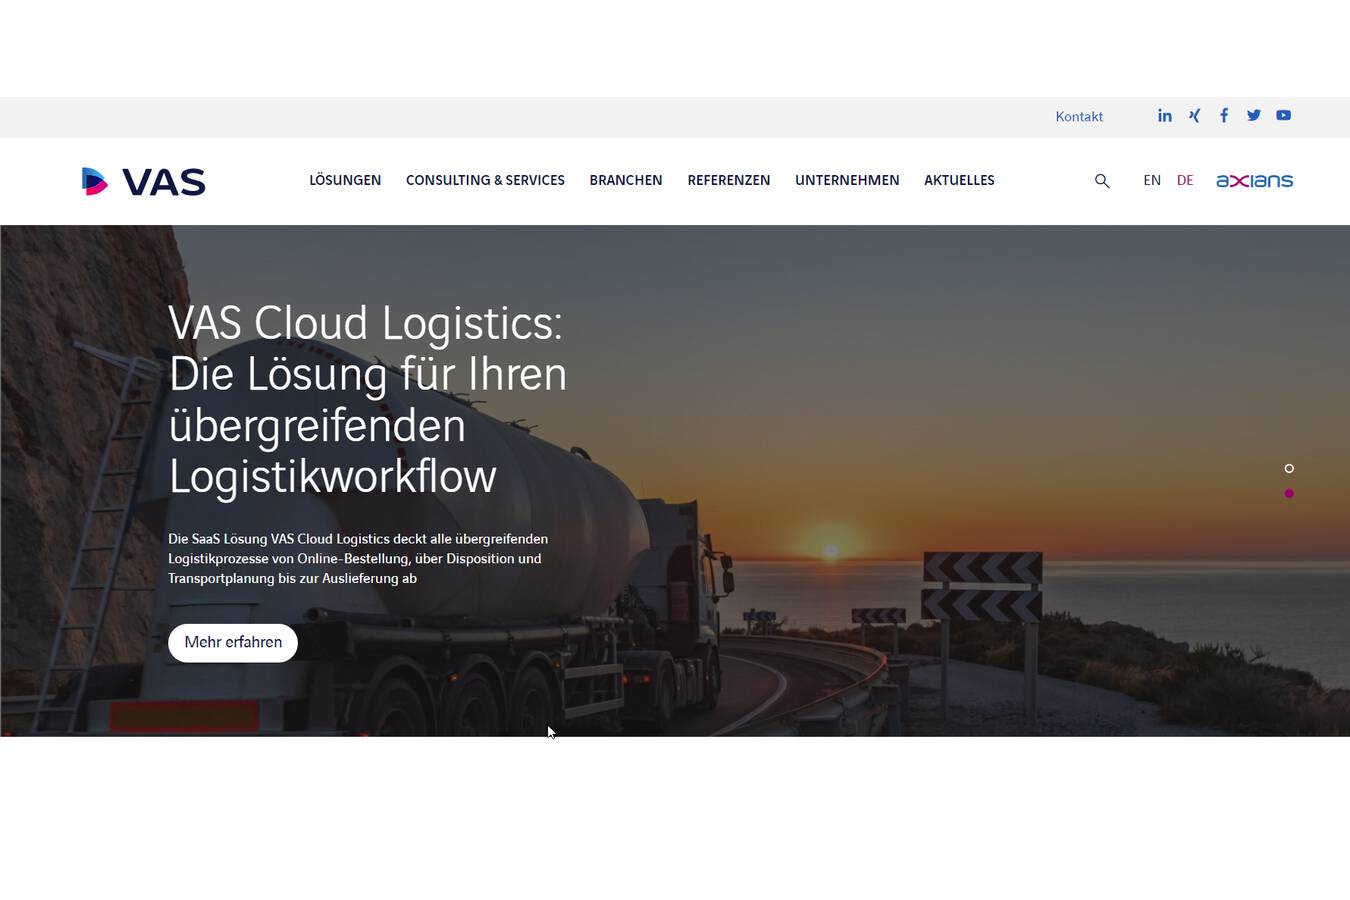 VAS Cloud Logistics